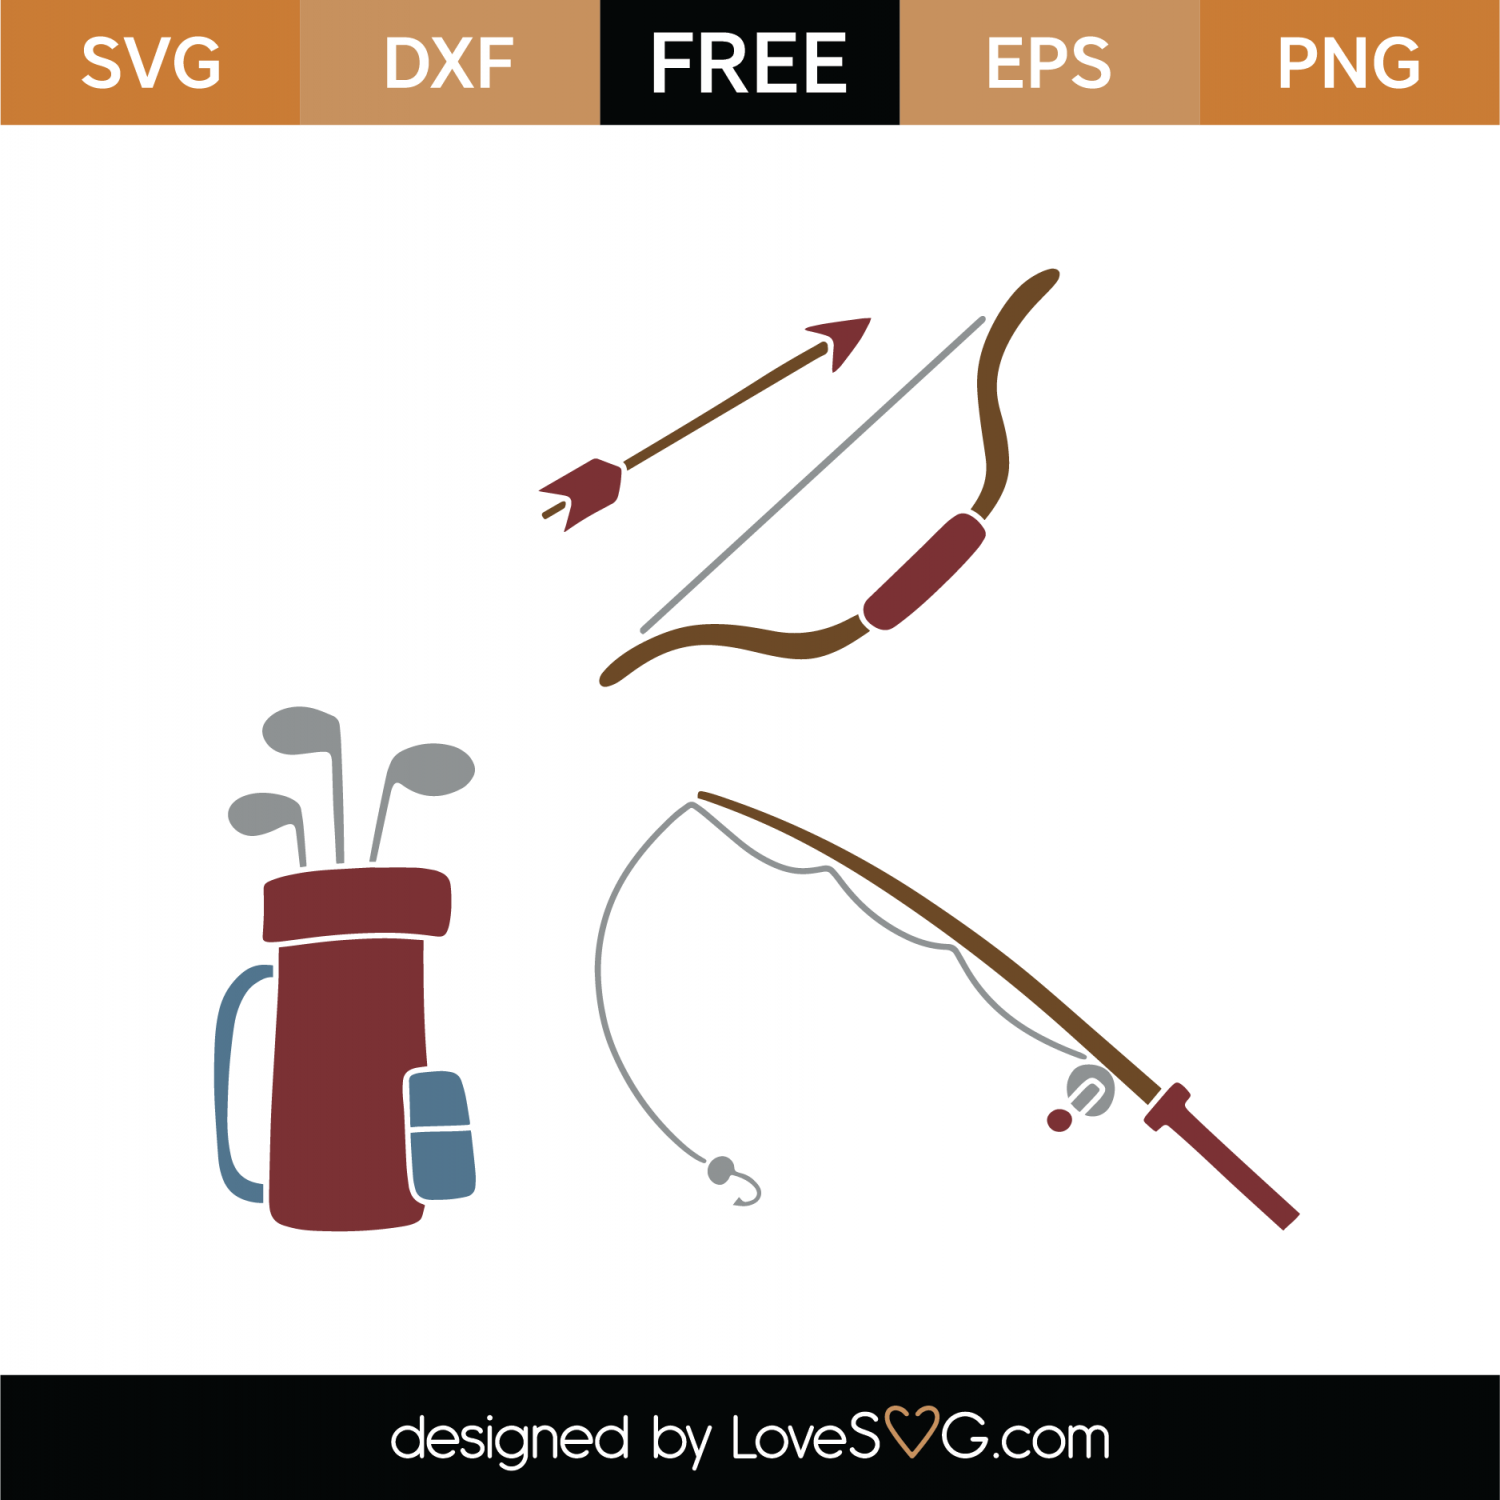 Download Free Fishing and Golf SVG Cut File | Lovesvg.com